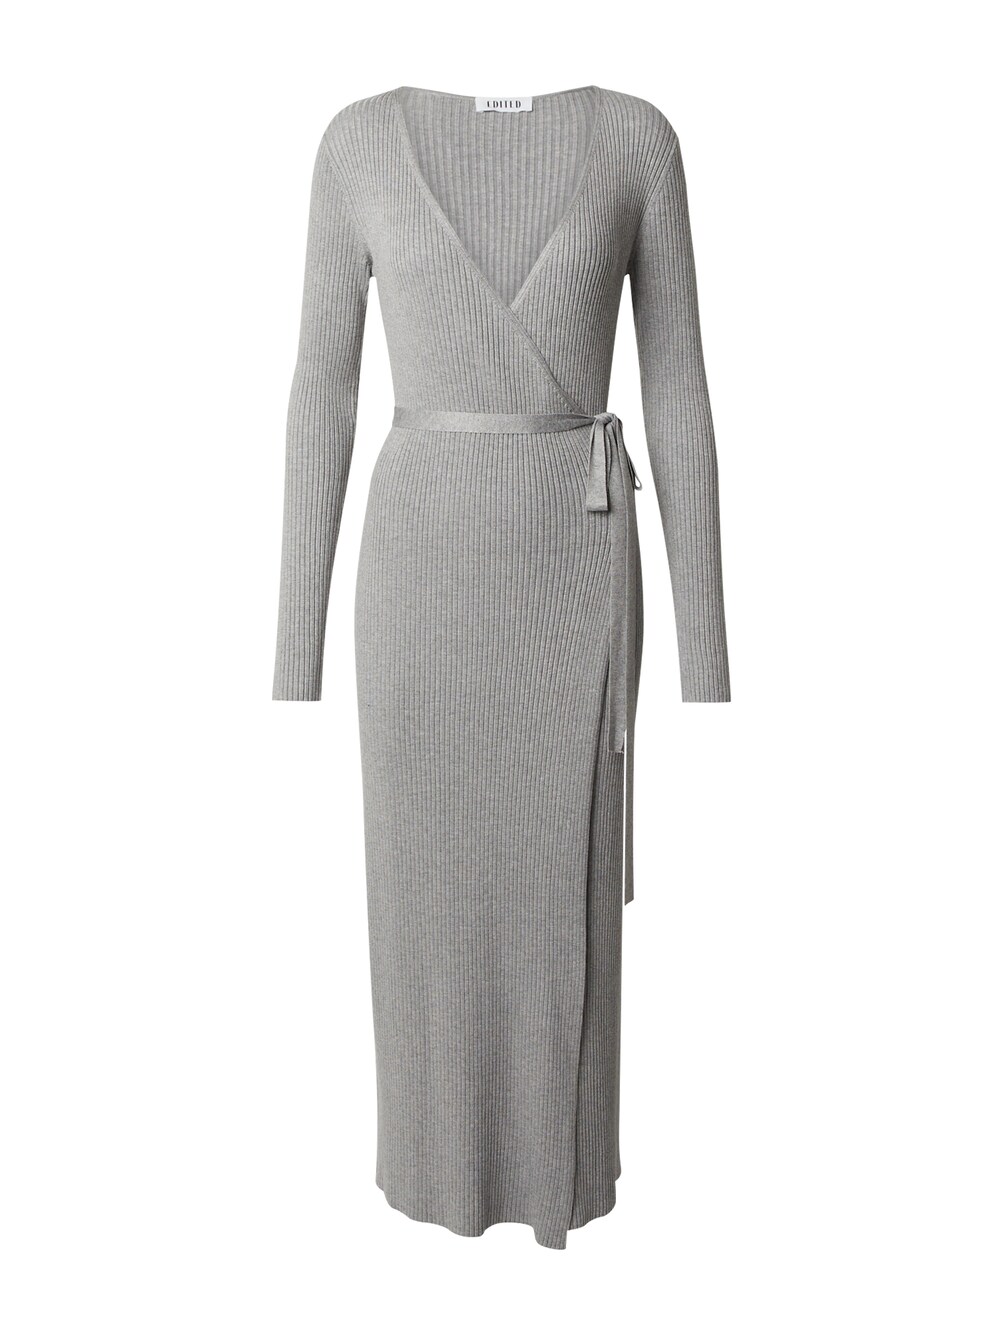 Вязанное платье Edited Mailien, светло-серый/пестрый серый